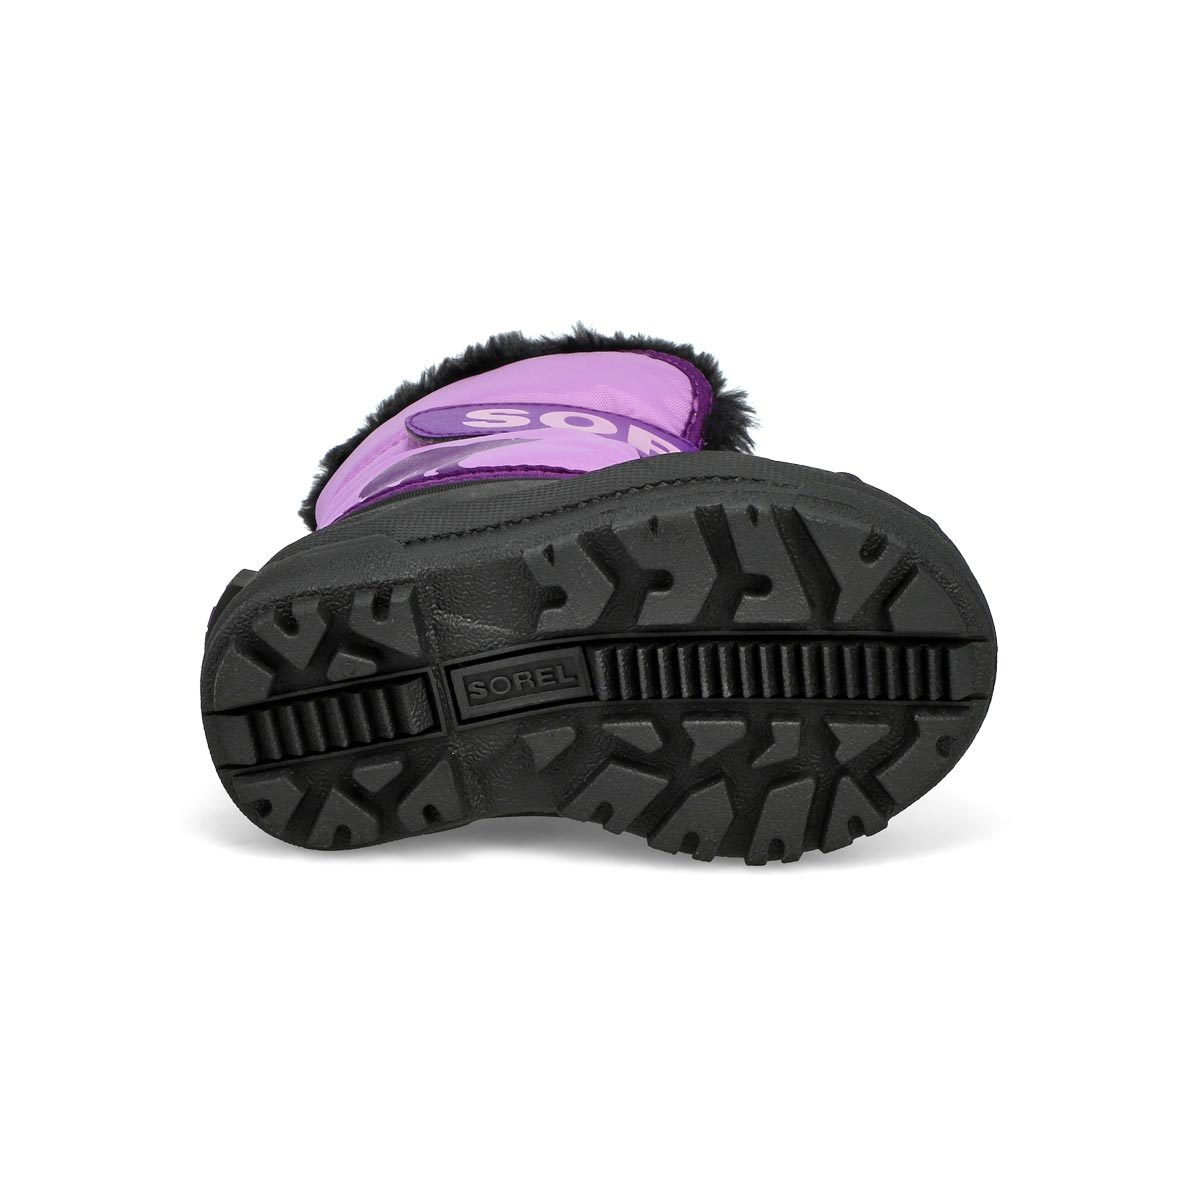 Infants'  Snow Commander Boot- Purple